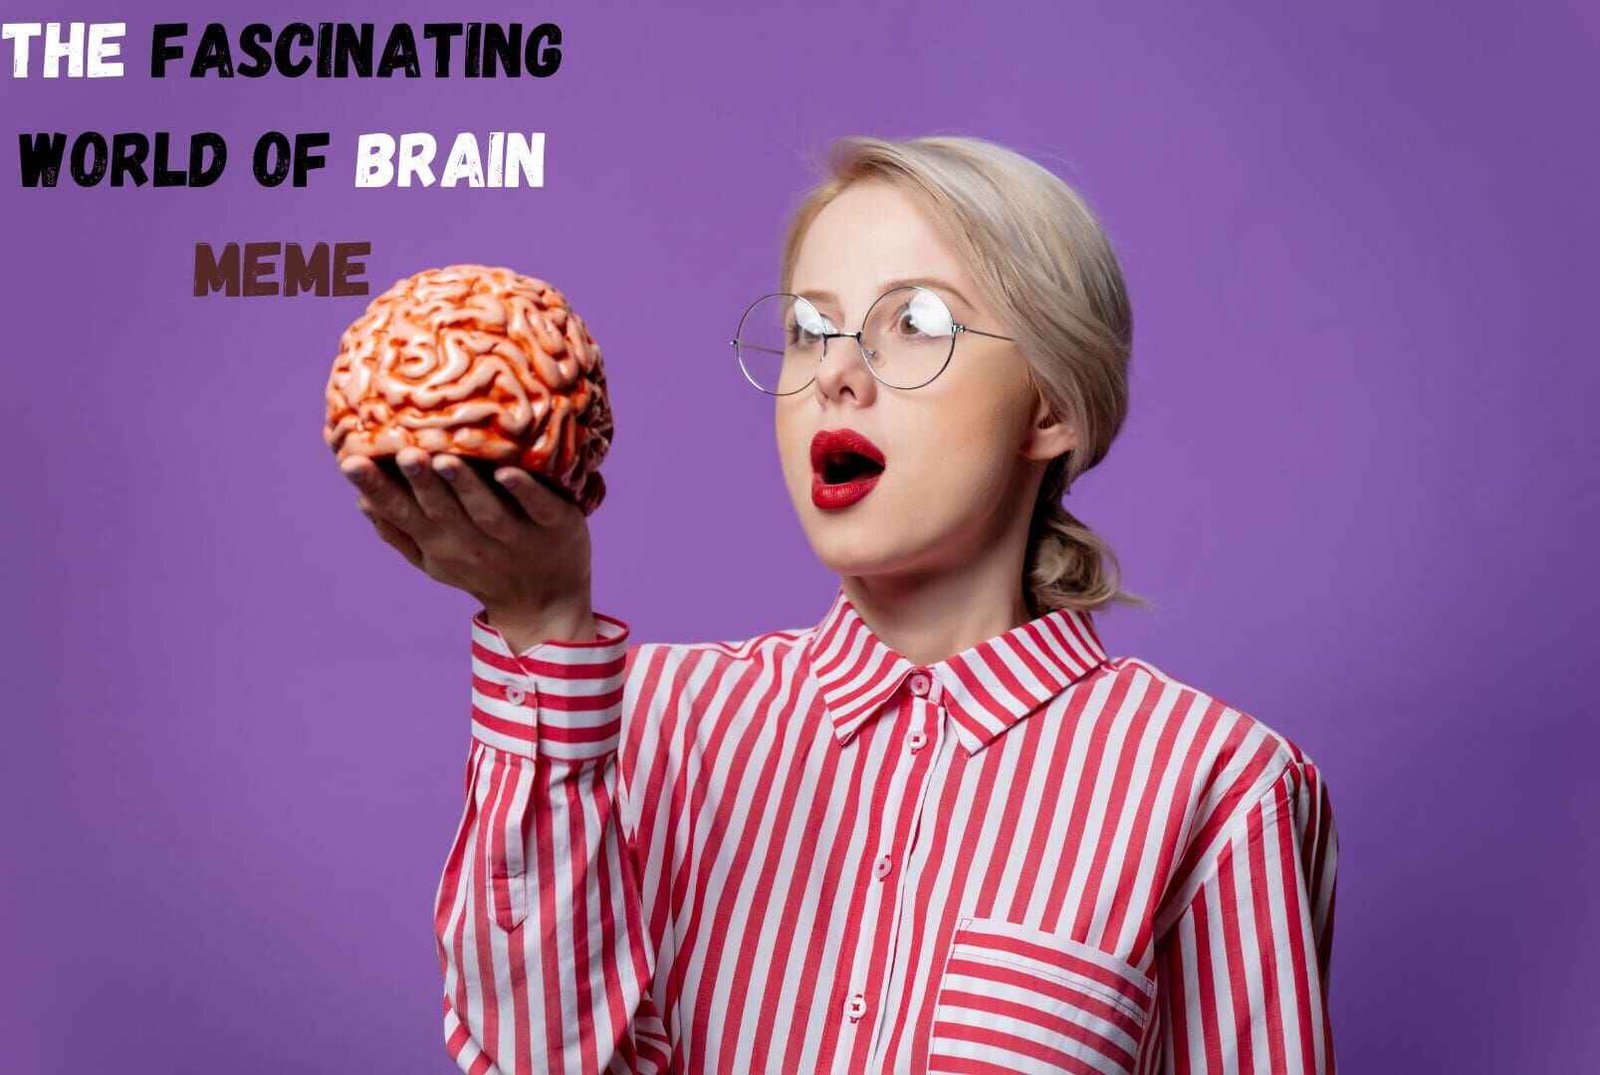 The Fascinating World of Brain Meme